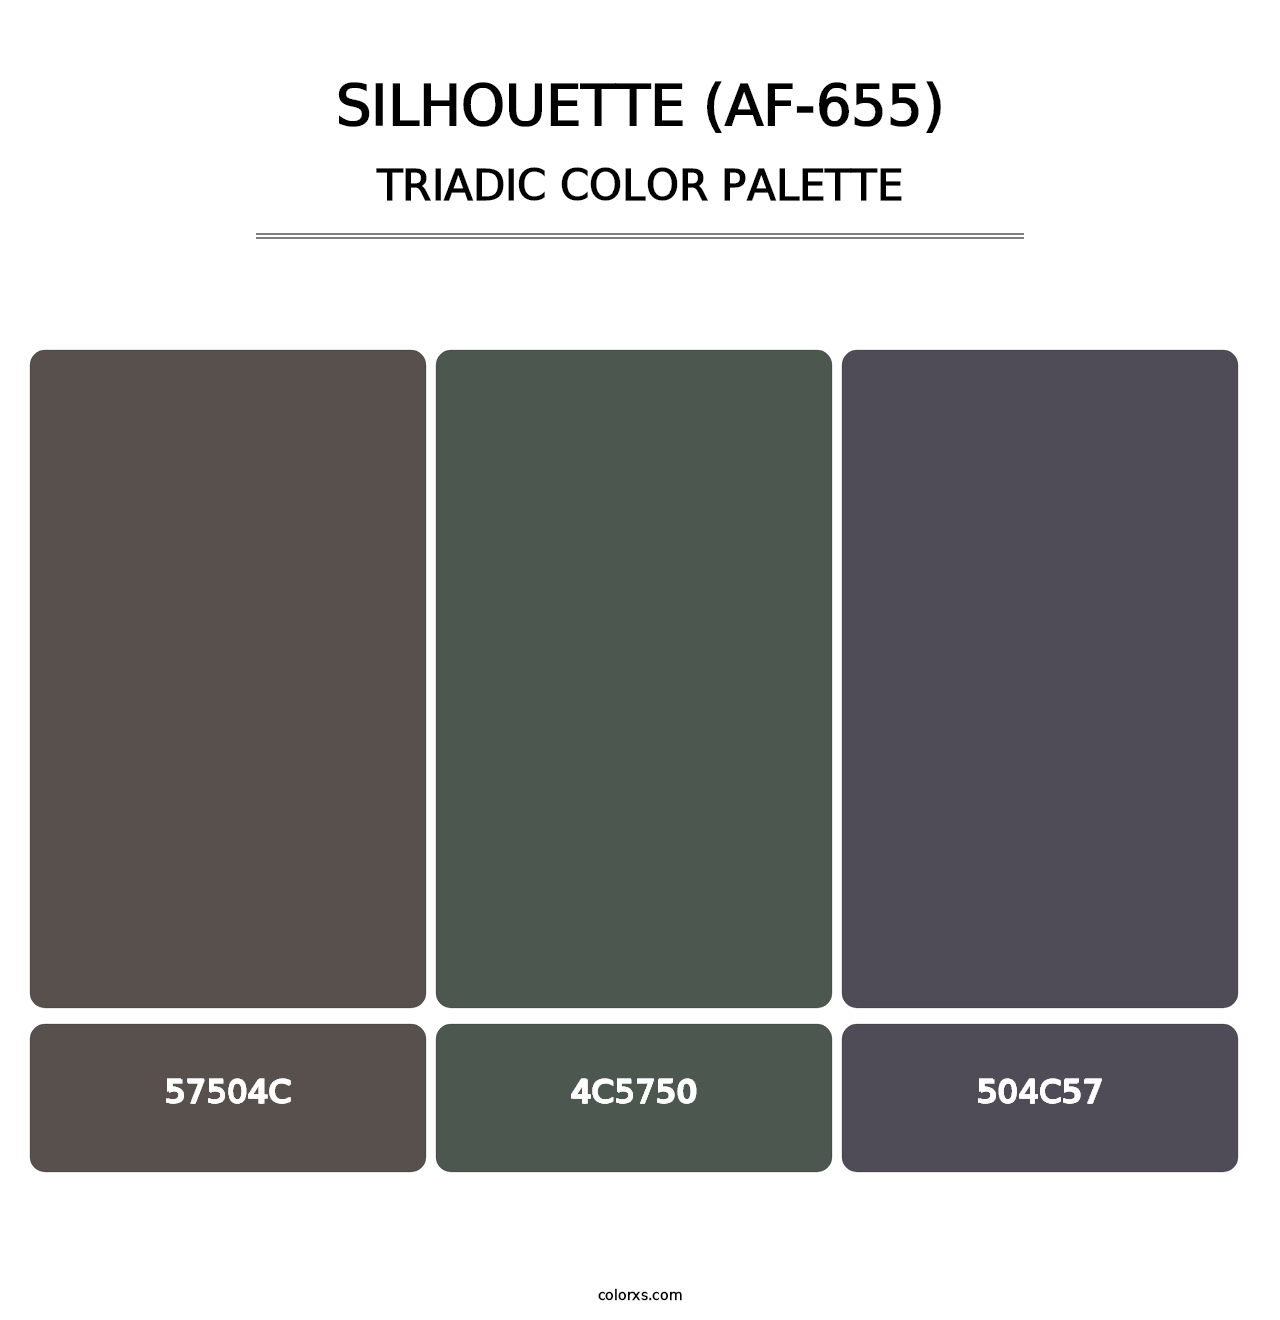 Silhouette (AF-655) - Triadic Color Palette